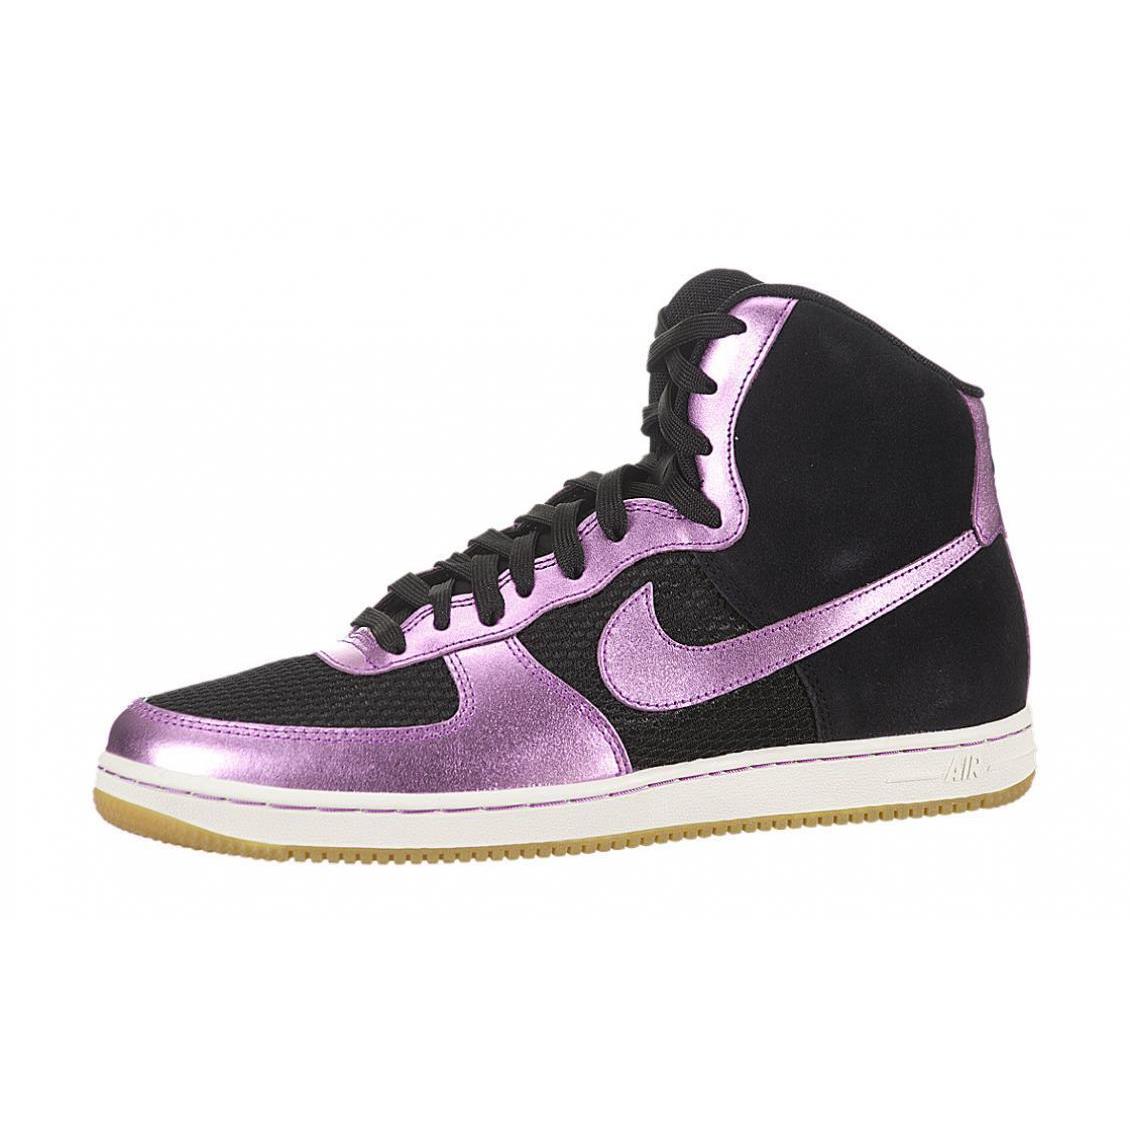 Nike Women`s Air Force 1 Light High Purple Black Shoes 525395 050 Size 8 - Black